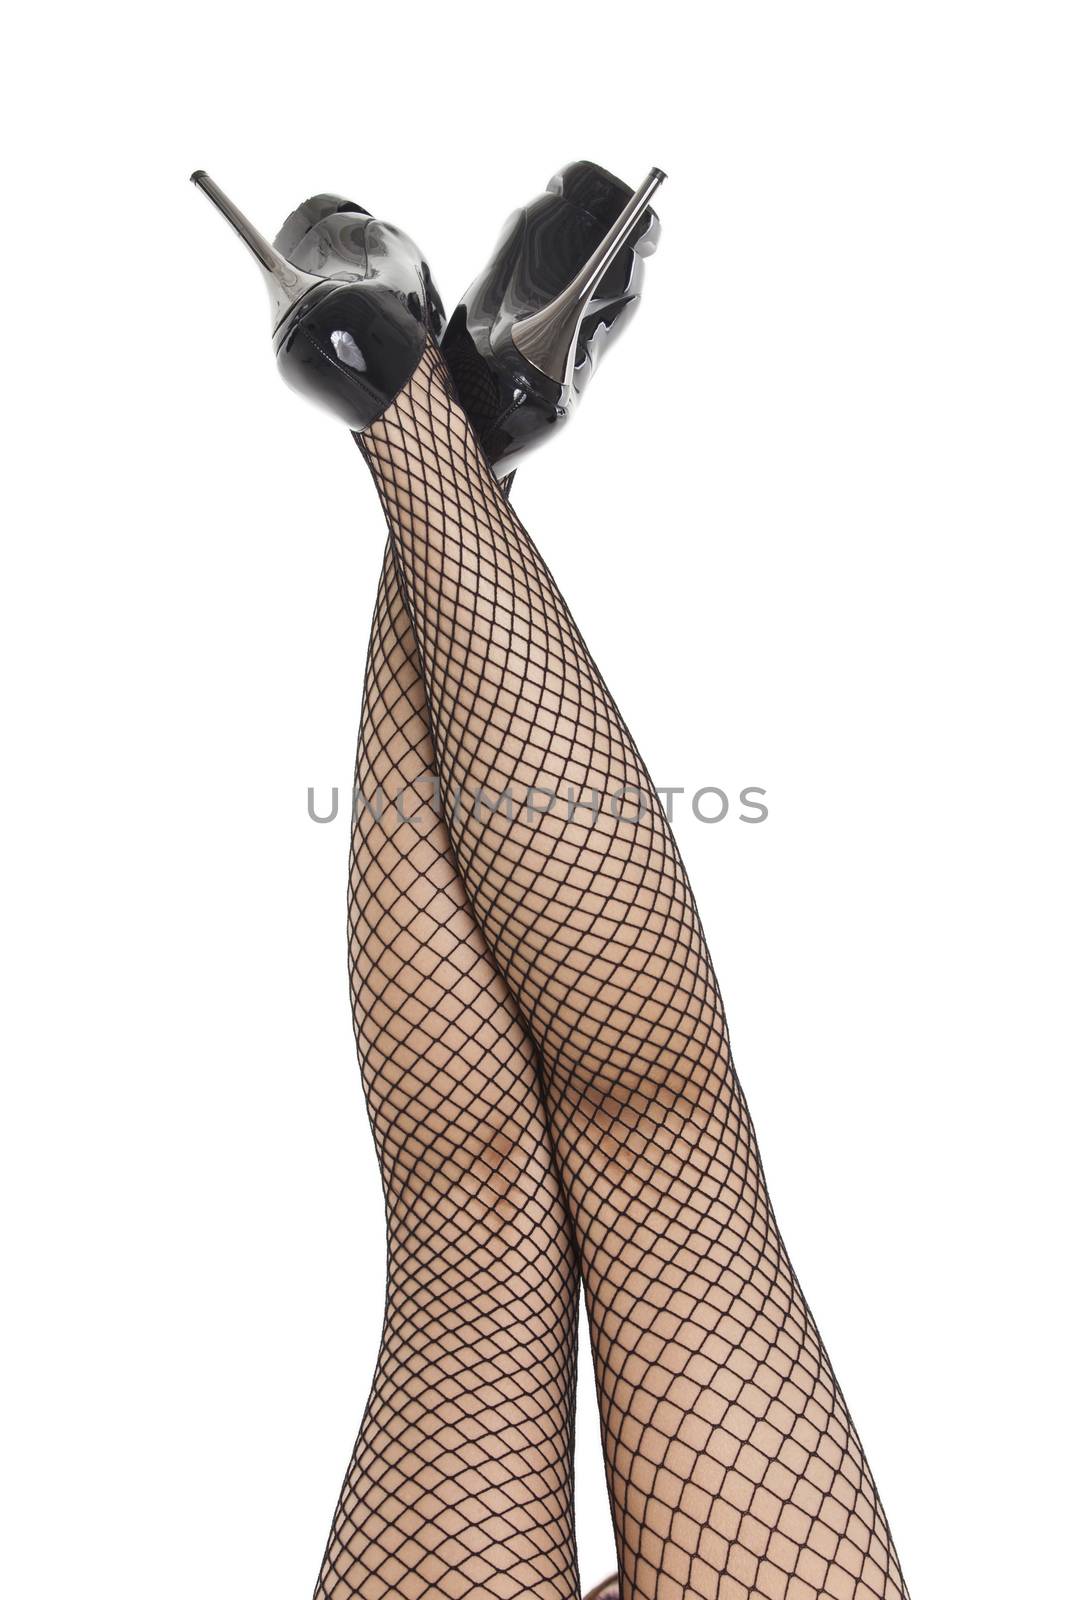 womans feet in fish net stockings